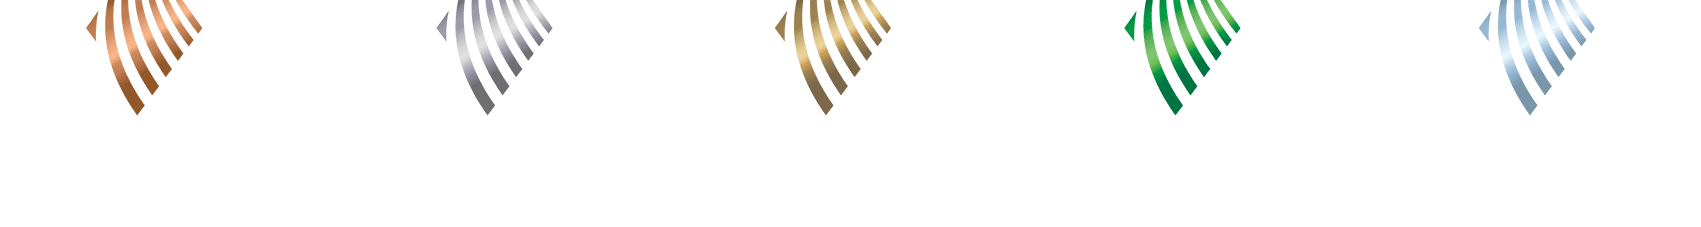 Caloundra Waves Rewards level logos